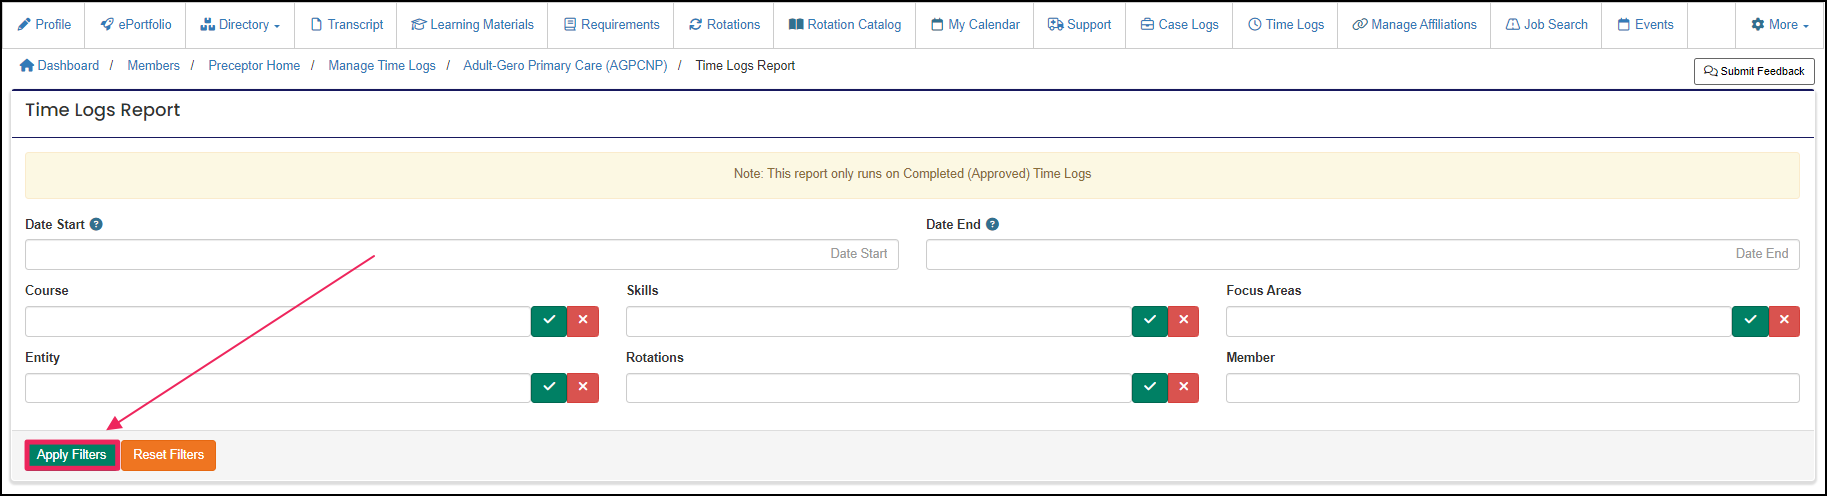 image screenshot filter options to Time Log report